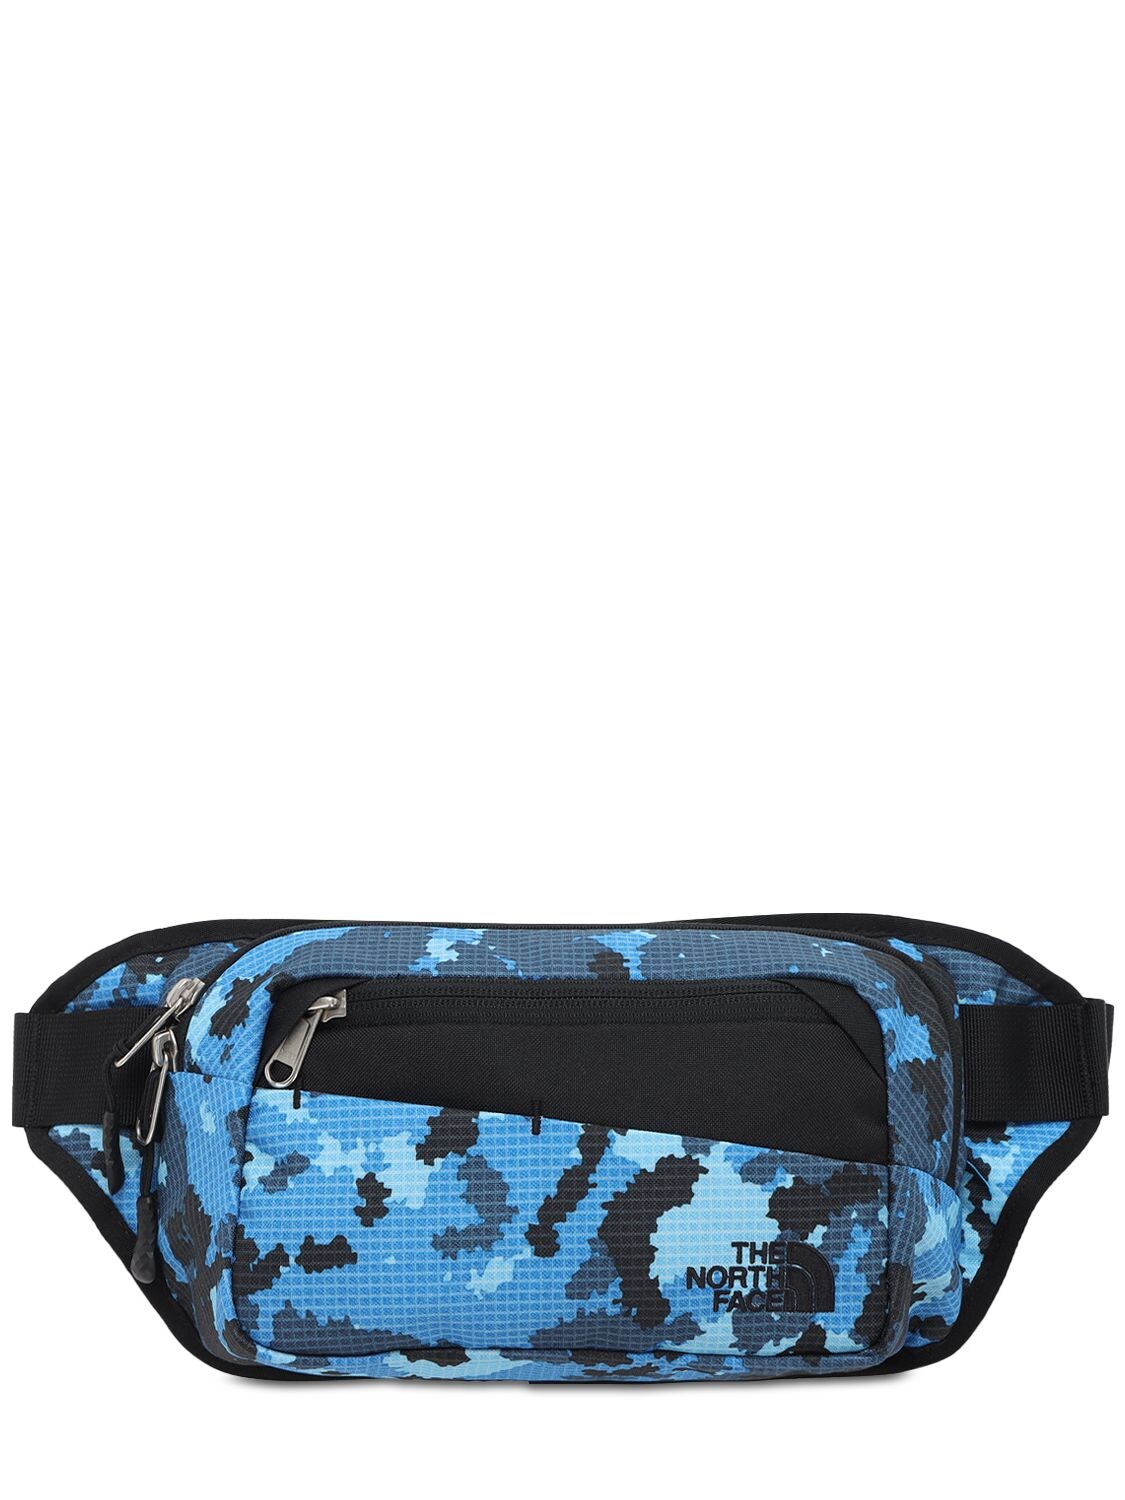 The North Face 2l Bozer Tech Belt Bag In Blue,multi